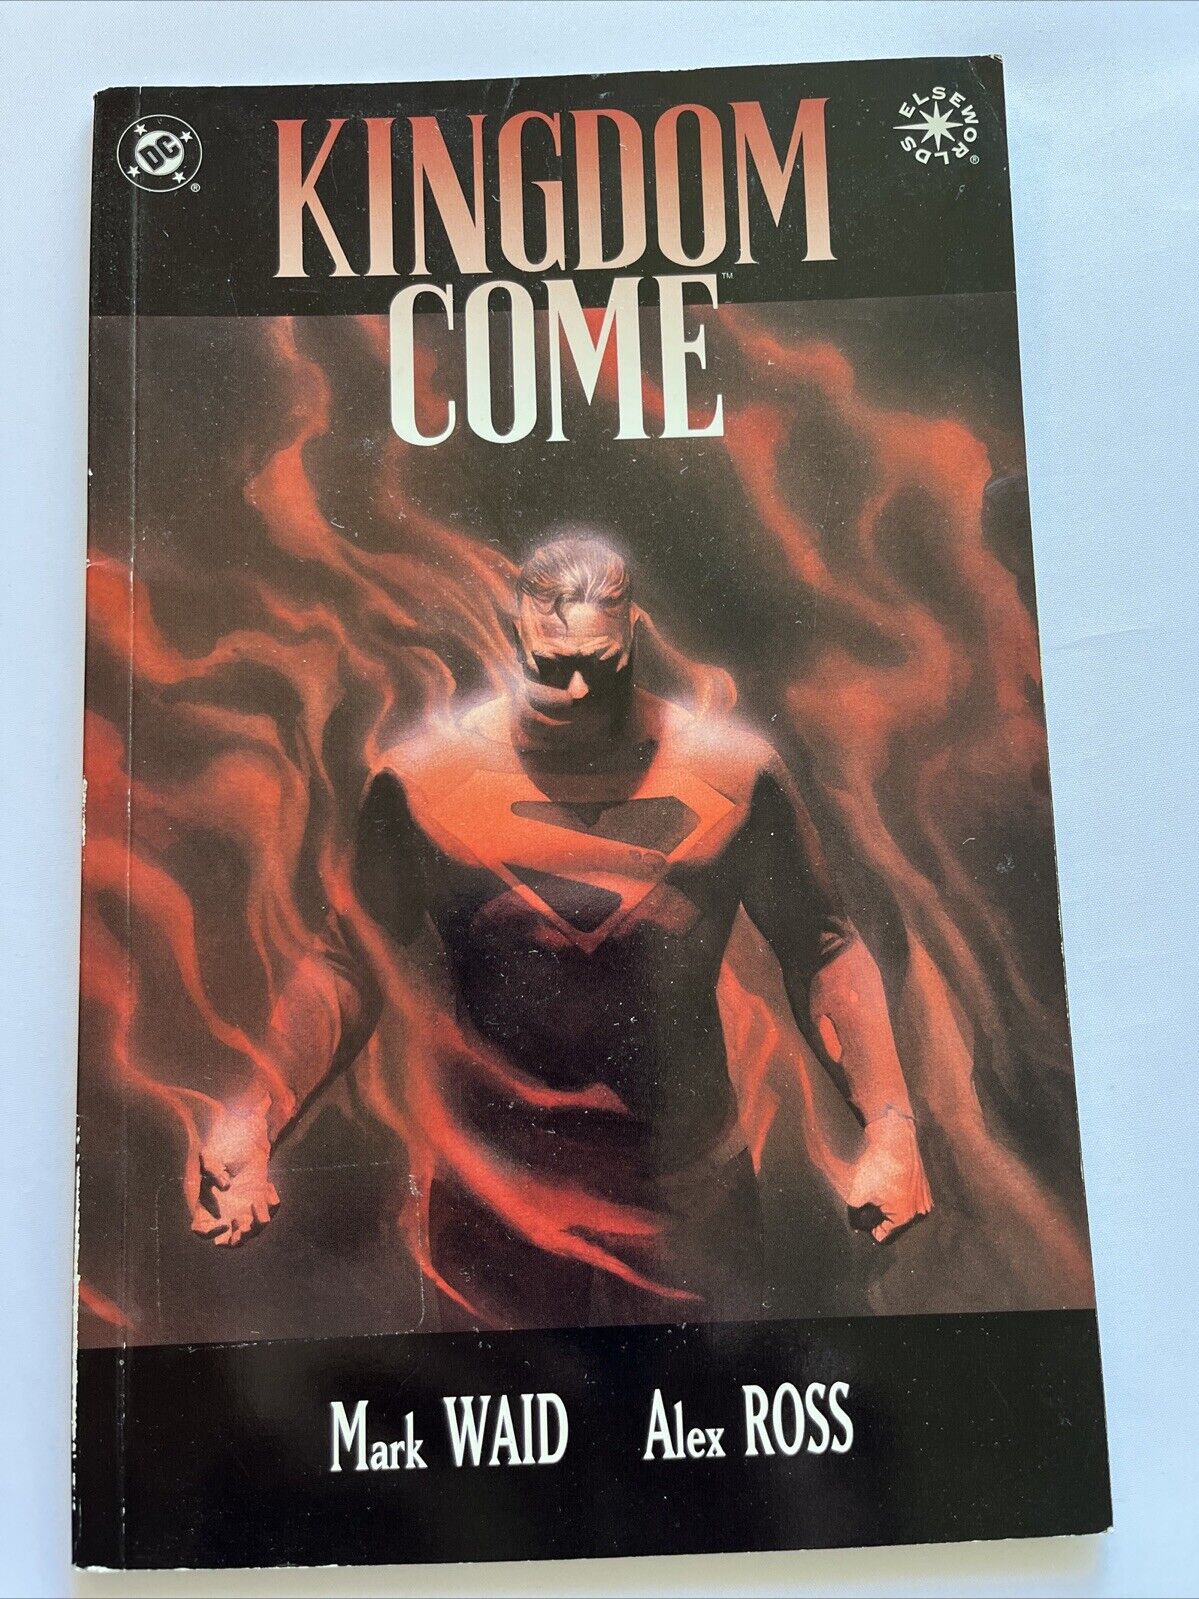 DC, Elseworlds Kingdom Come #4, TPB, GN, 1996, Mark Waid, Alex Ross